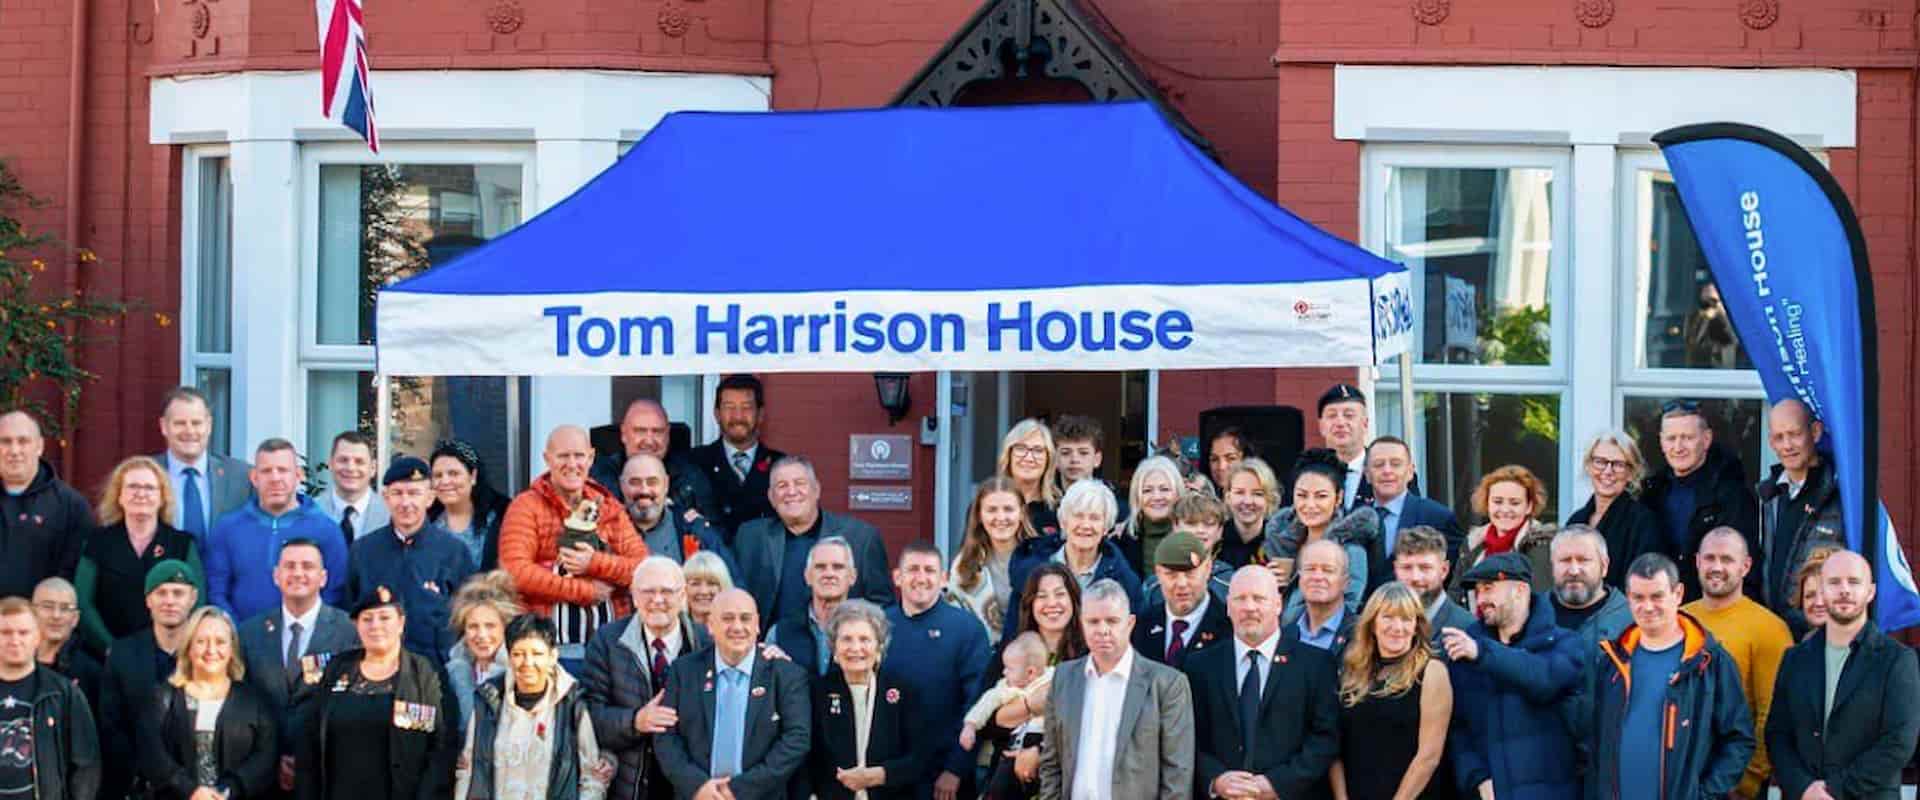 Tom Harrison House